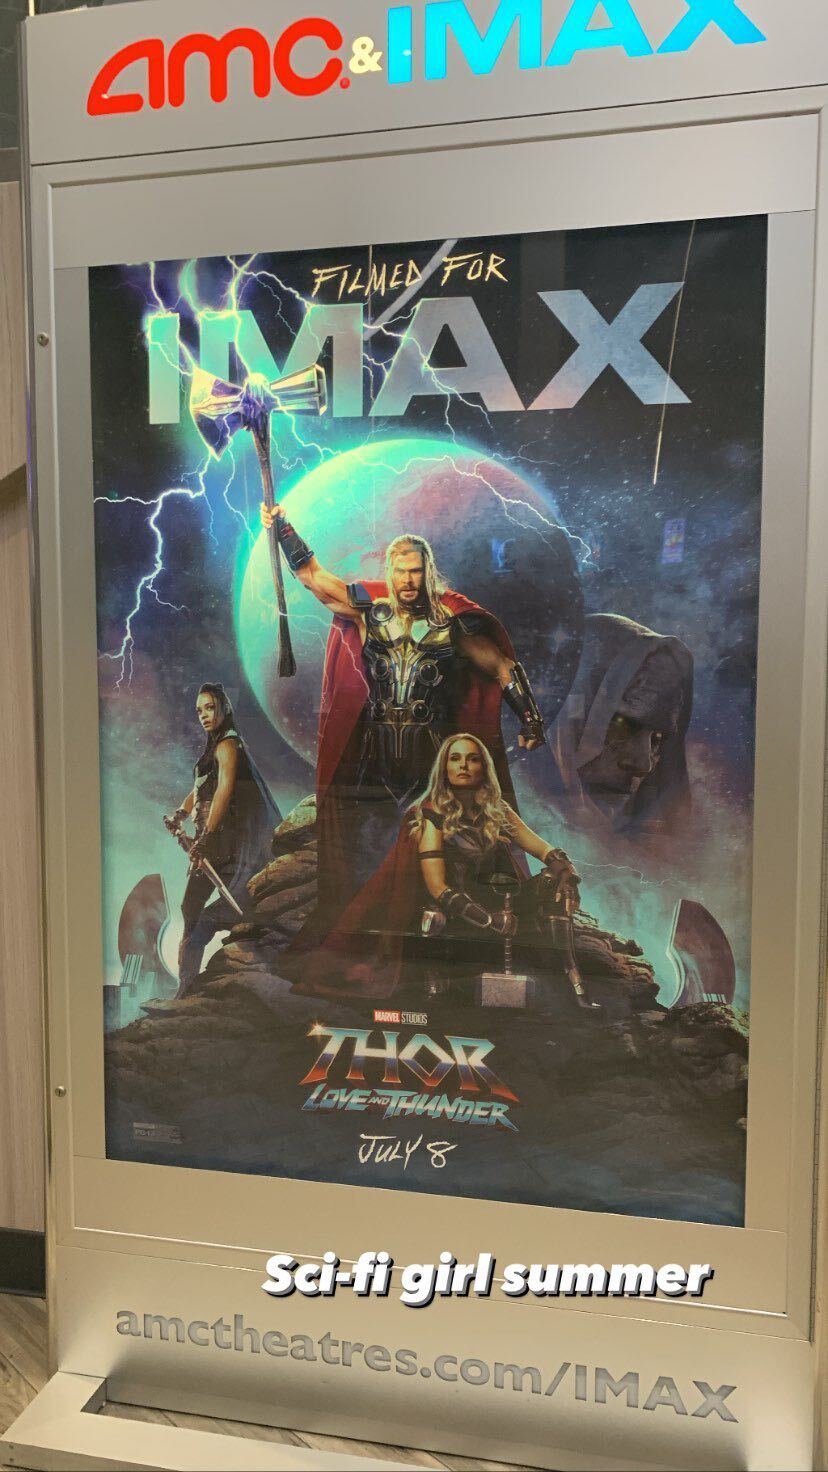 The movie poster for Thor Love & Thunder.